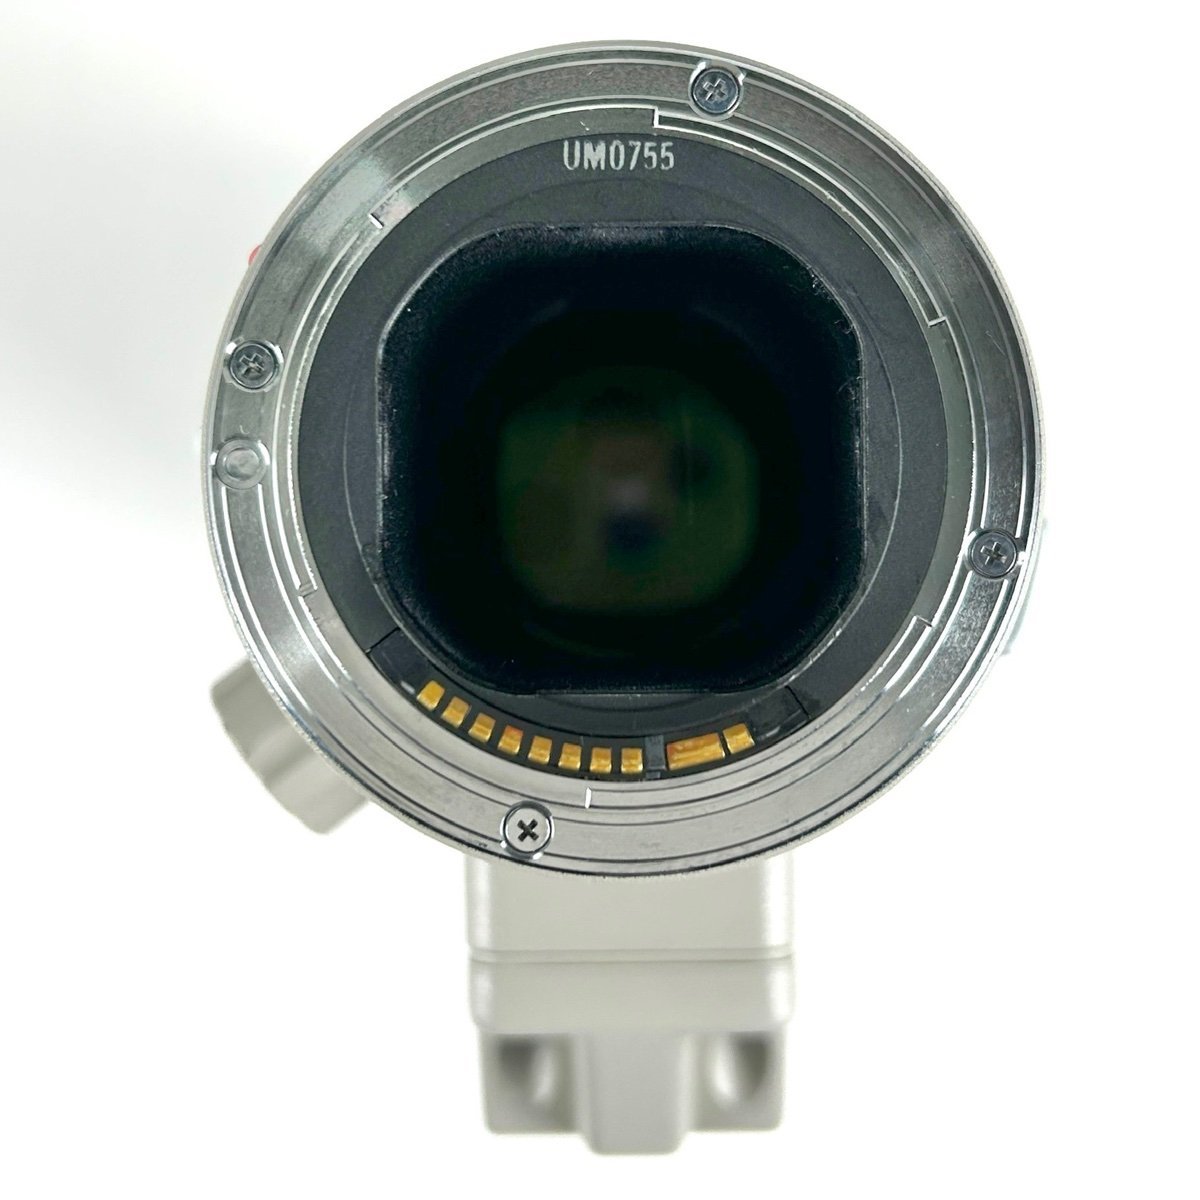  Canon Canon EF 500mm F4.5L USM [ junk ] single-lens camera for ( auto focus ) [ used ]